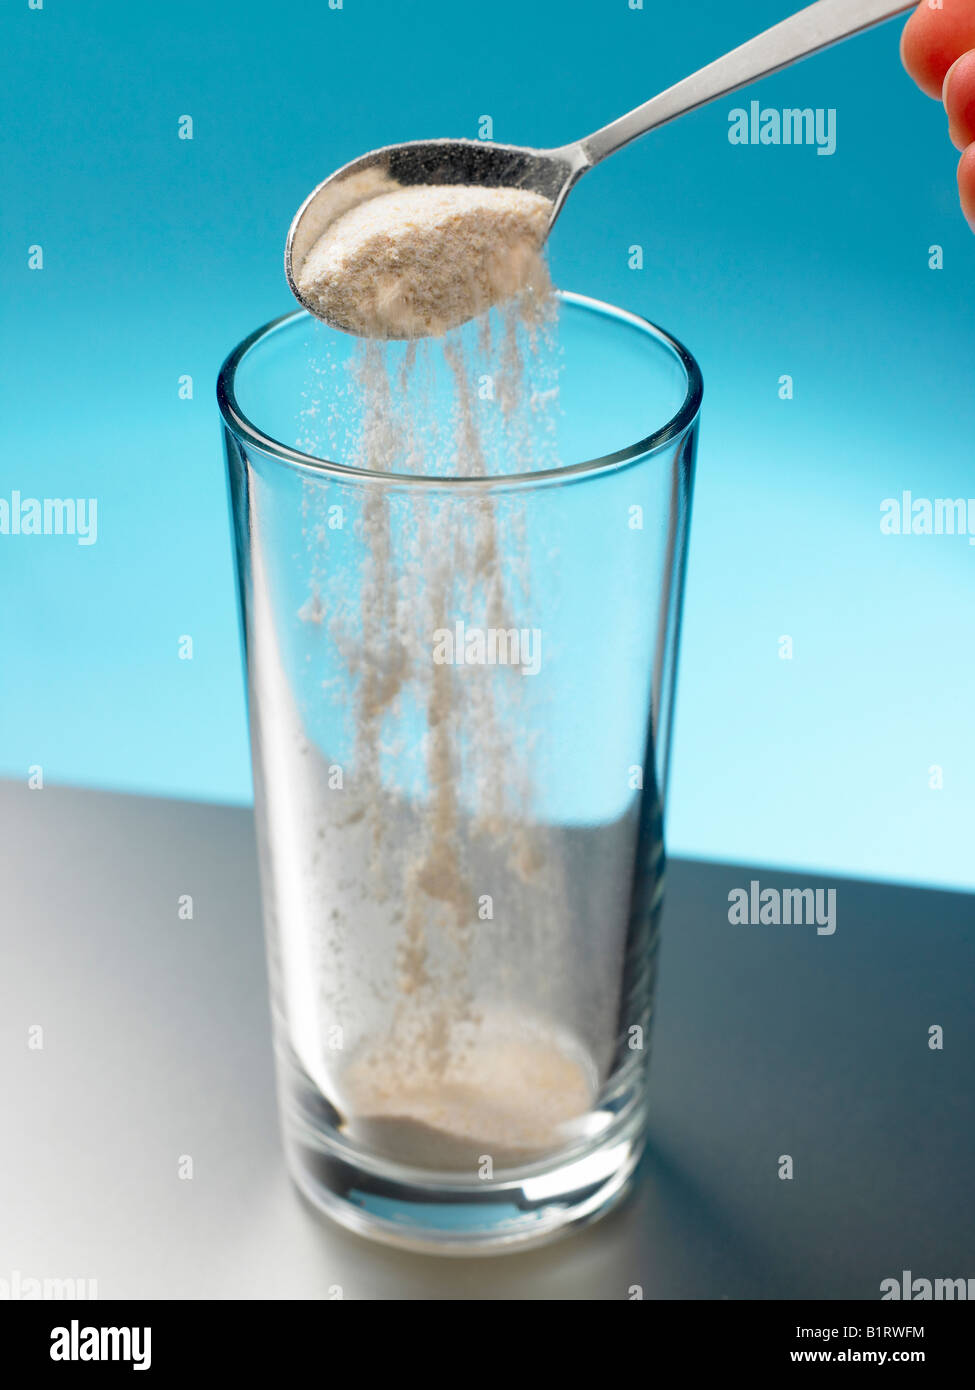 powdered drink mix Stock Photo